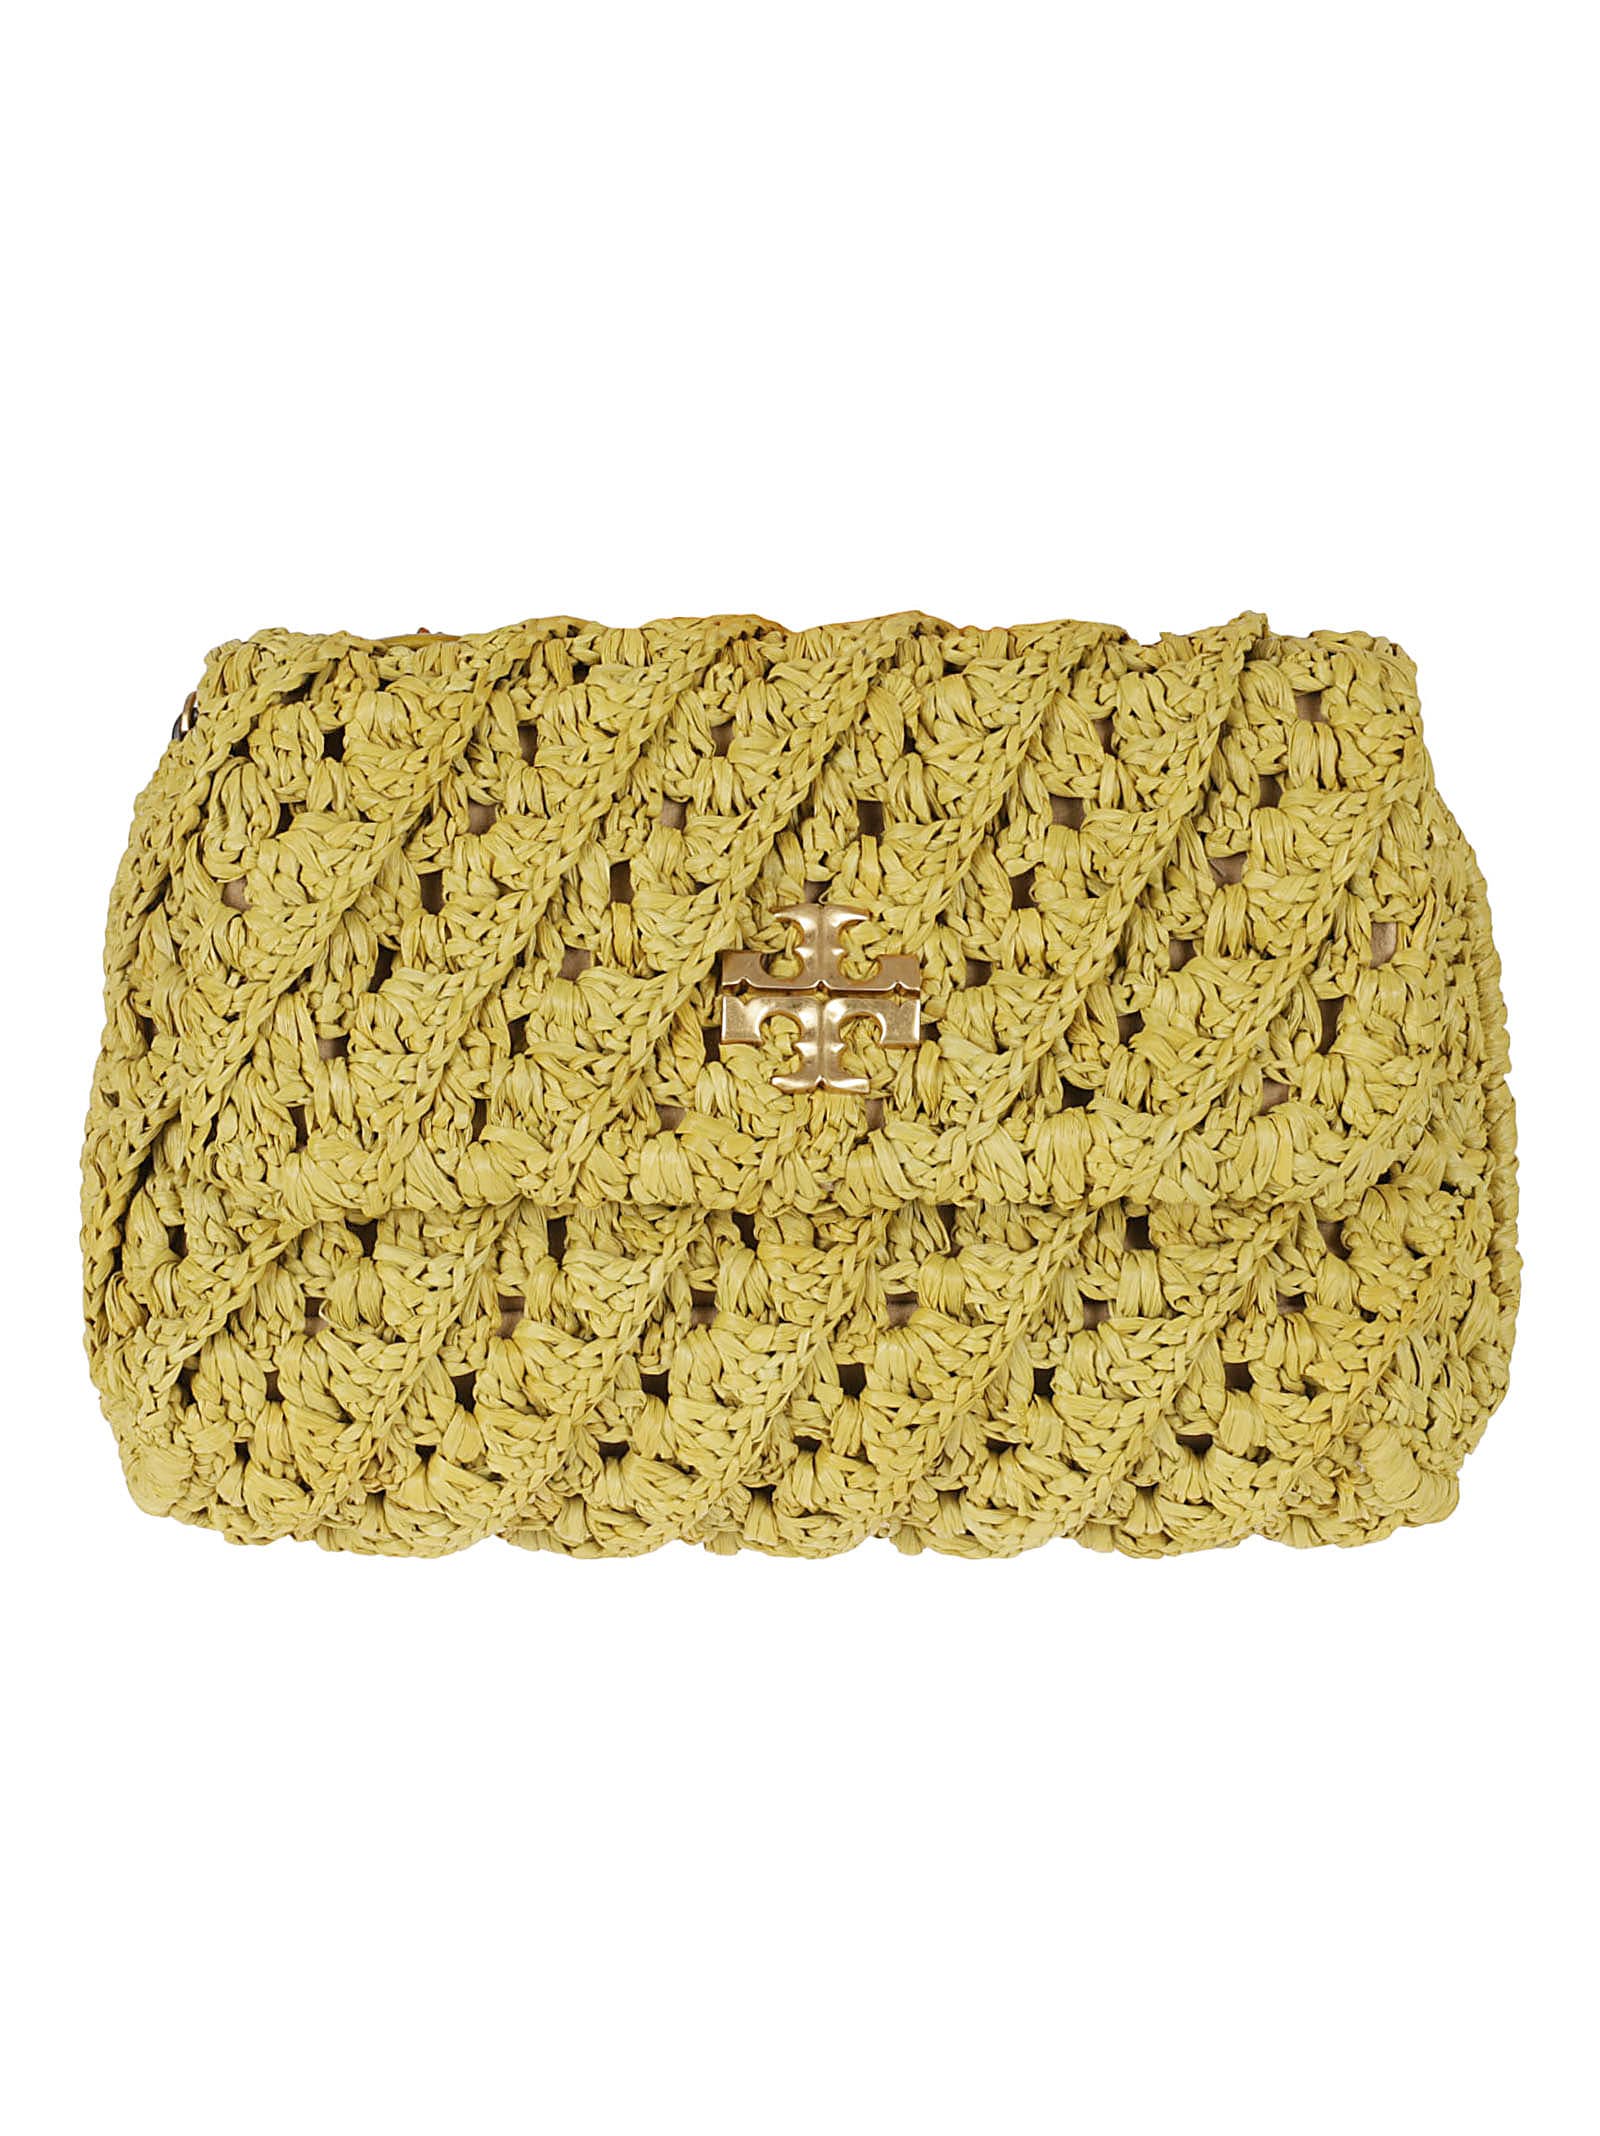 Tory Burch Kira Crochet Mini Shoulder Bag | italist, ALWAYS LIKE A SALE